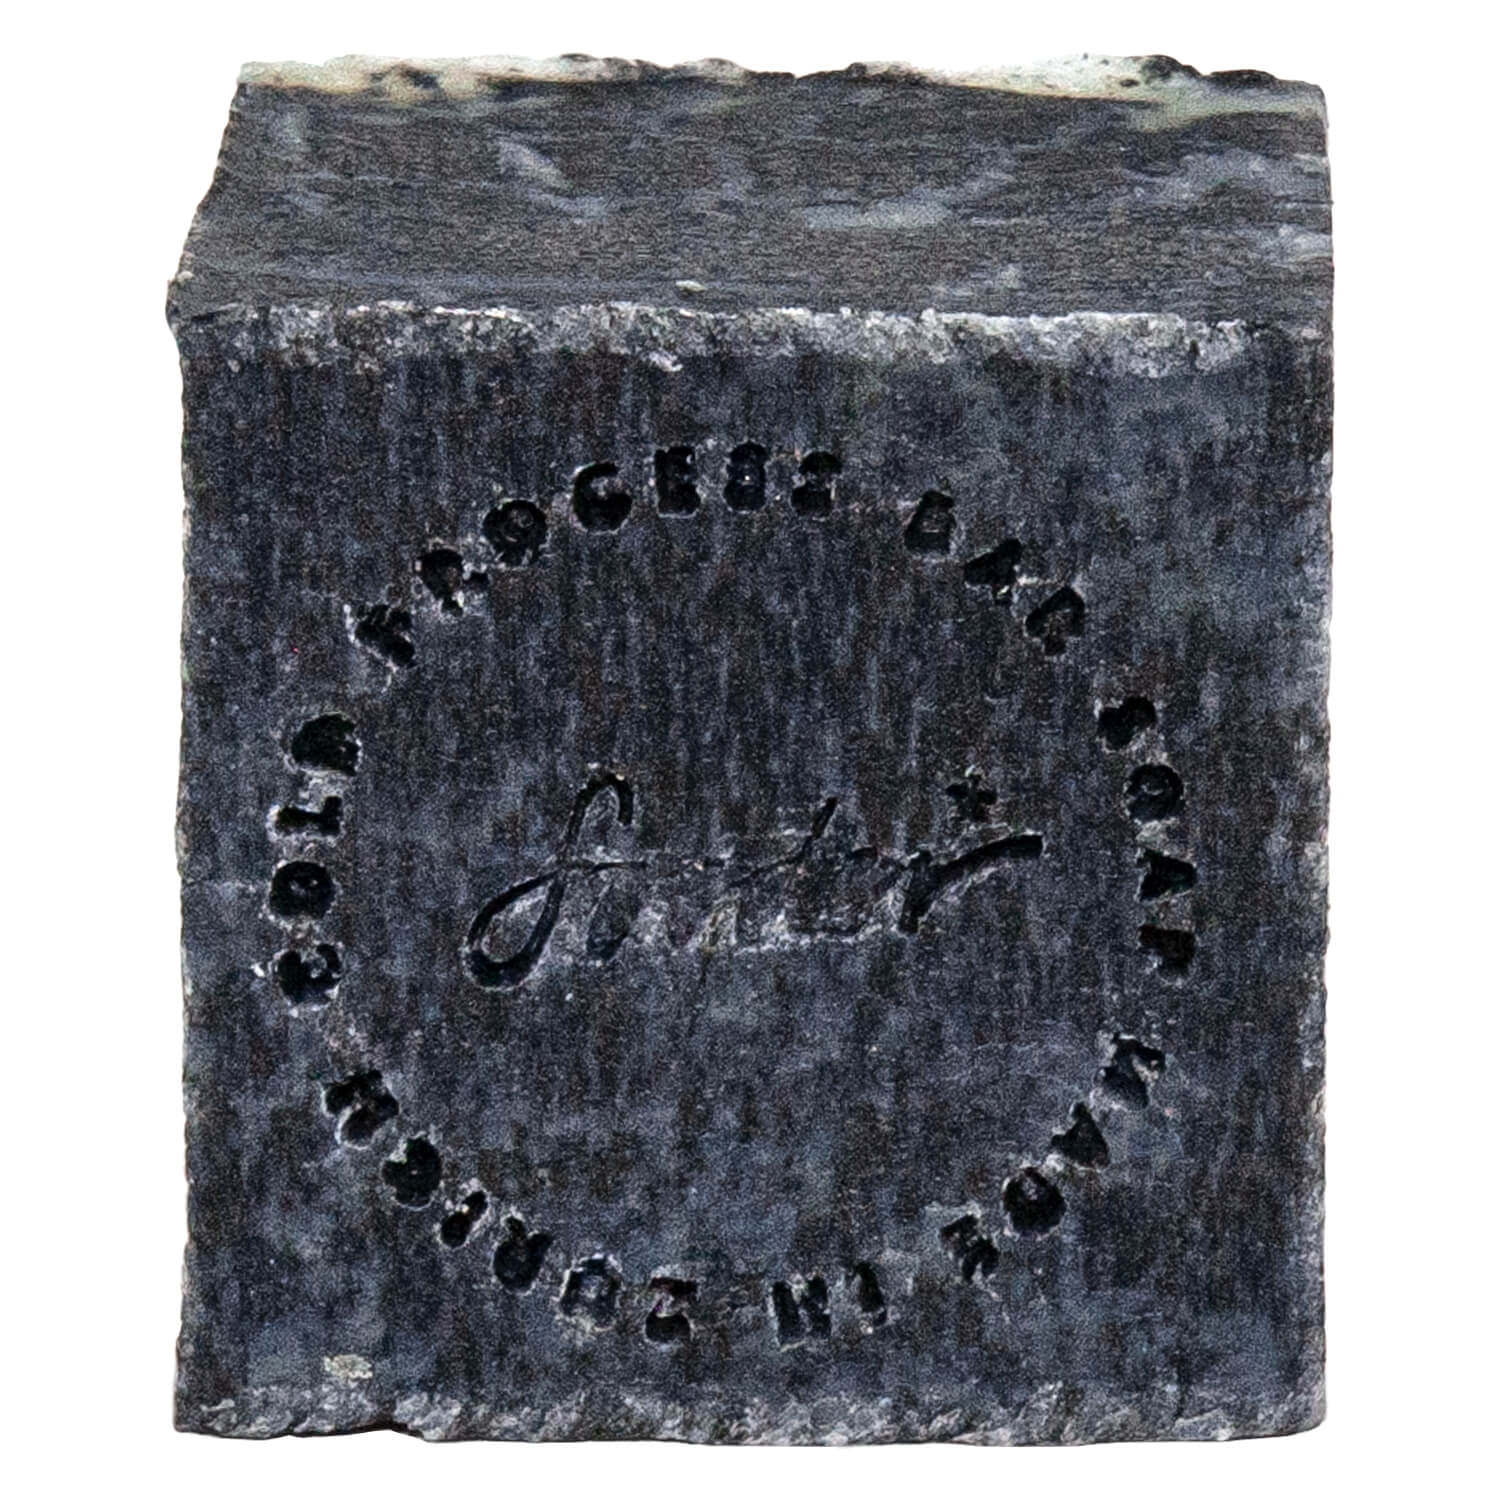 Product image from Soeder - Natural Bar Soap Coal Black Pine